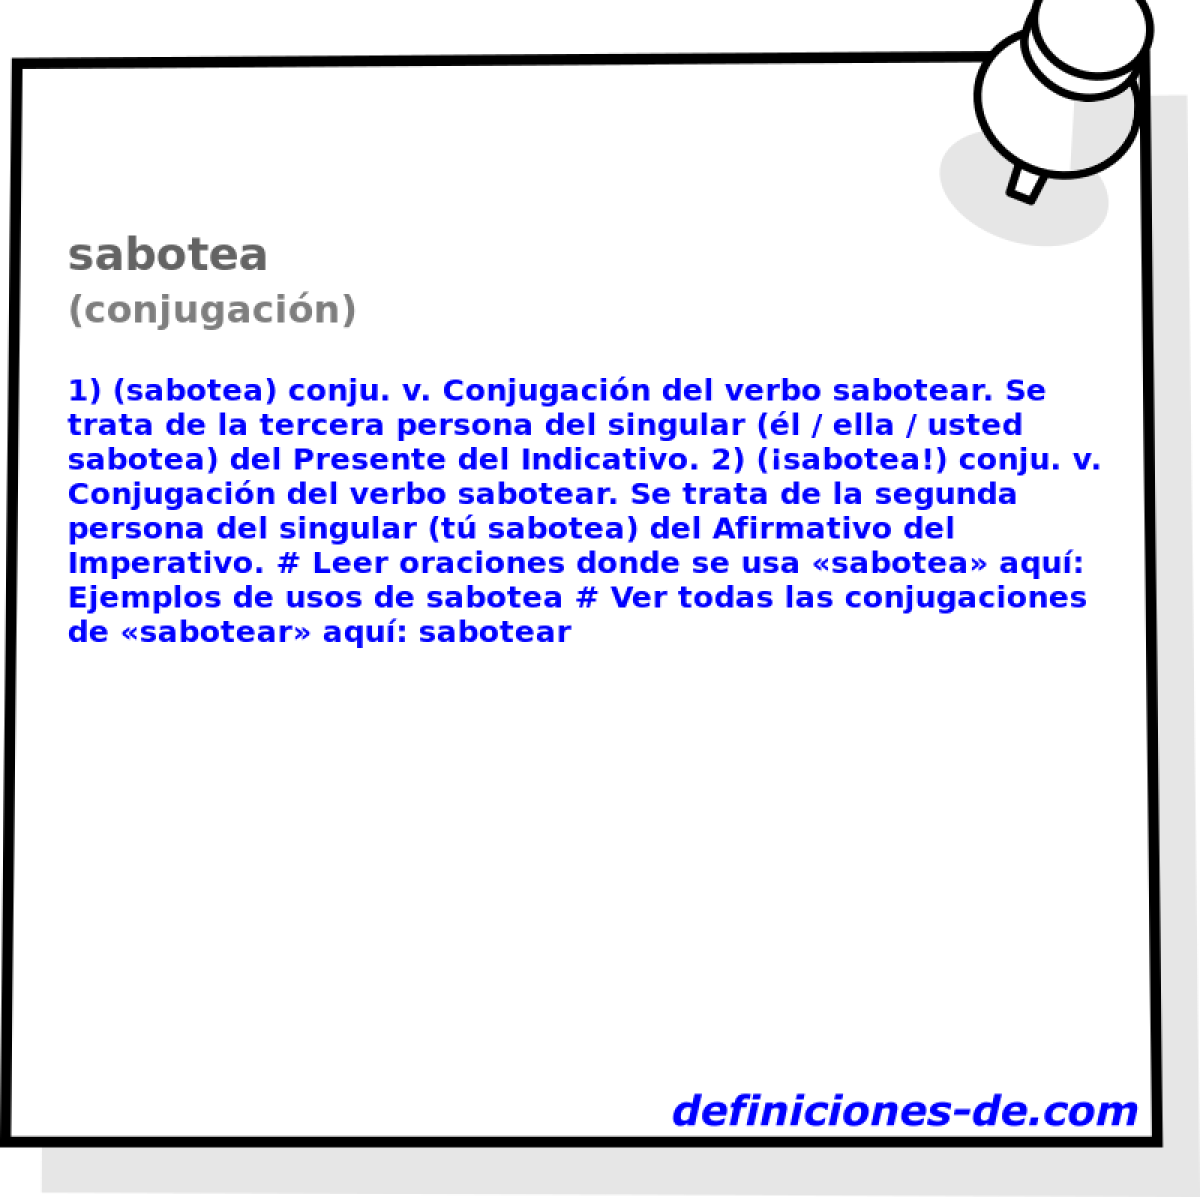 sabotea (conjugacin)